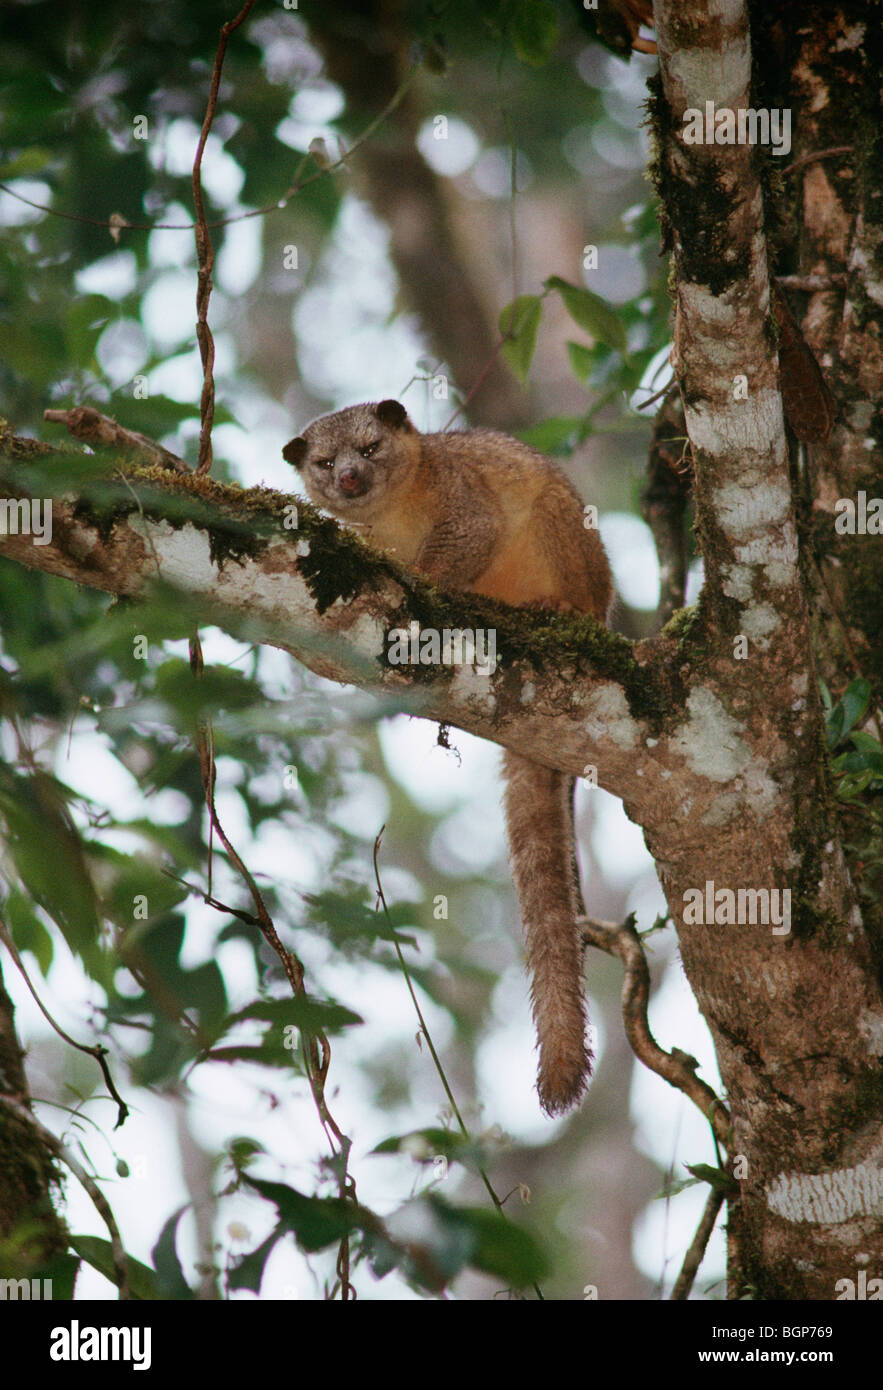 A Kinkajou in a tree, Costa Rica. Stock Photo